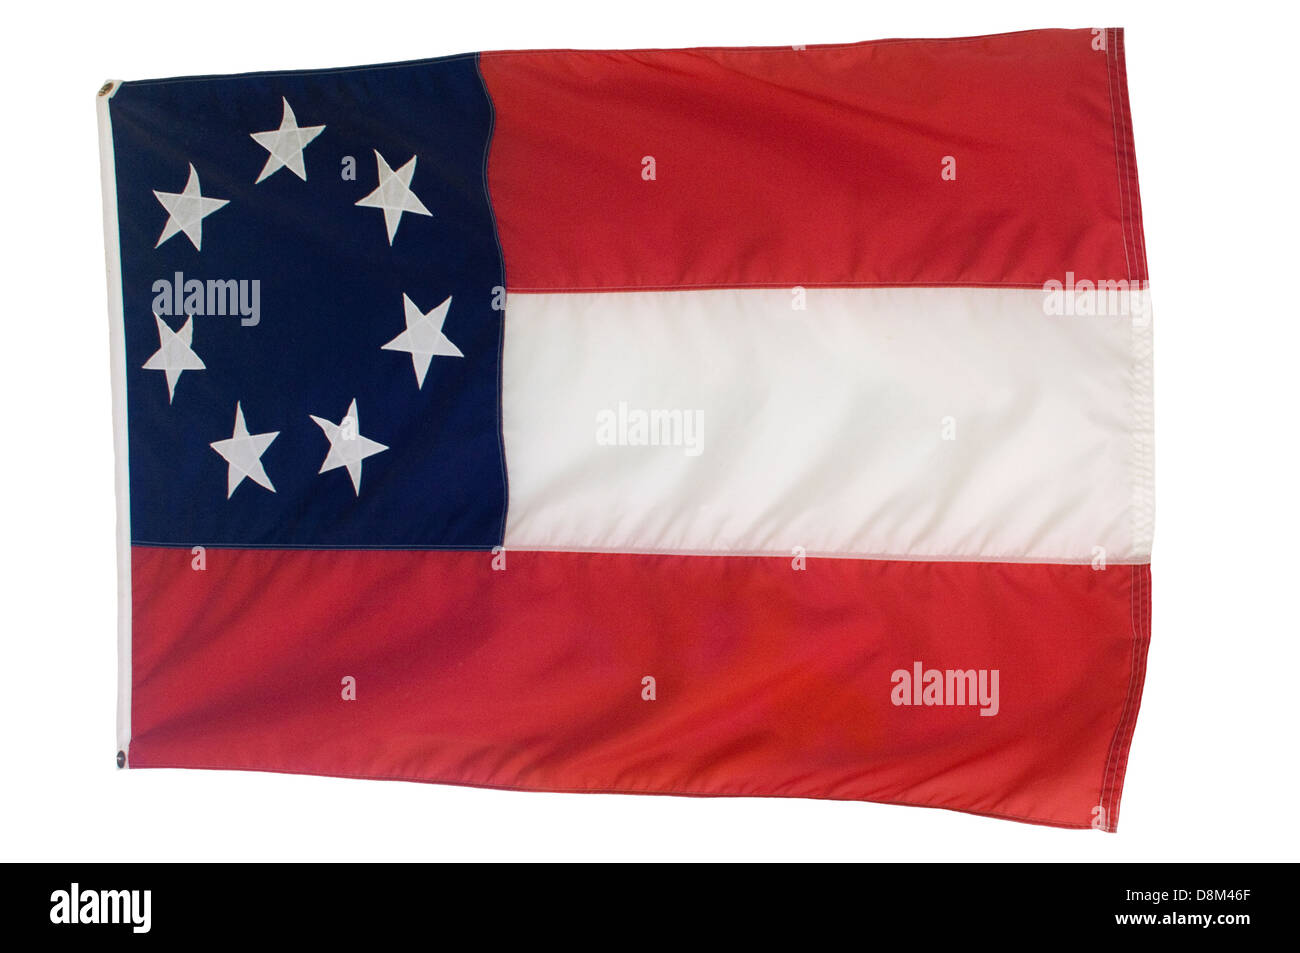 Erste Stars und Bars, Confederate Flag mit 7 Sternen, Fort Pillow State Park, Tennessee. Digitale Fotografie Stockfoto